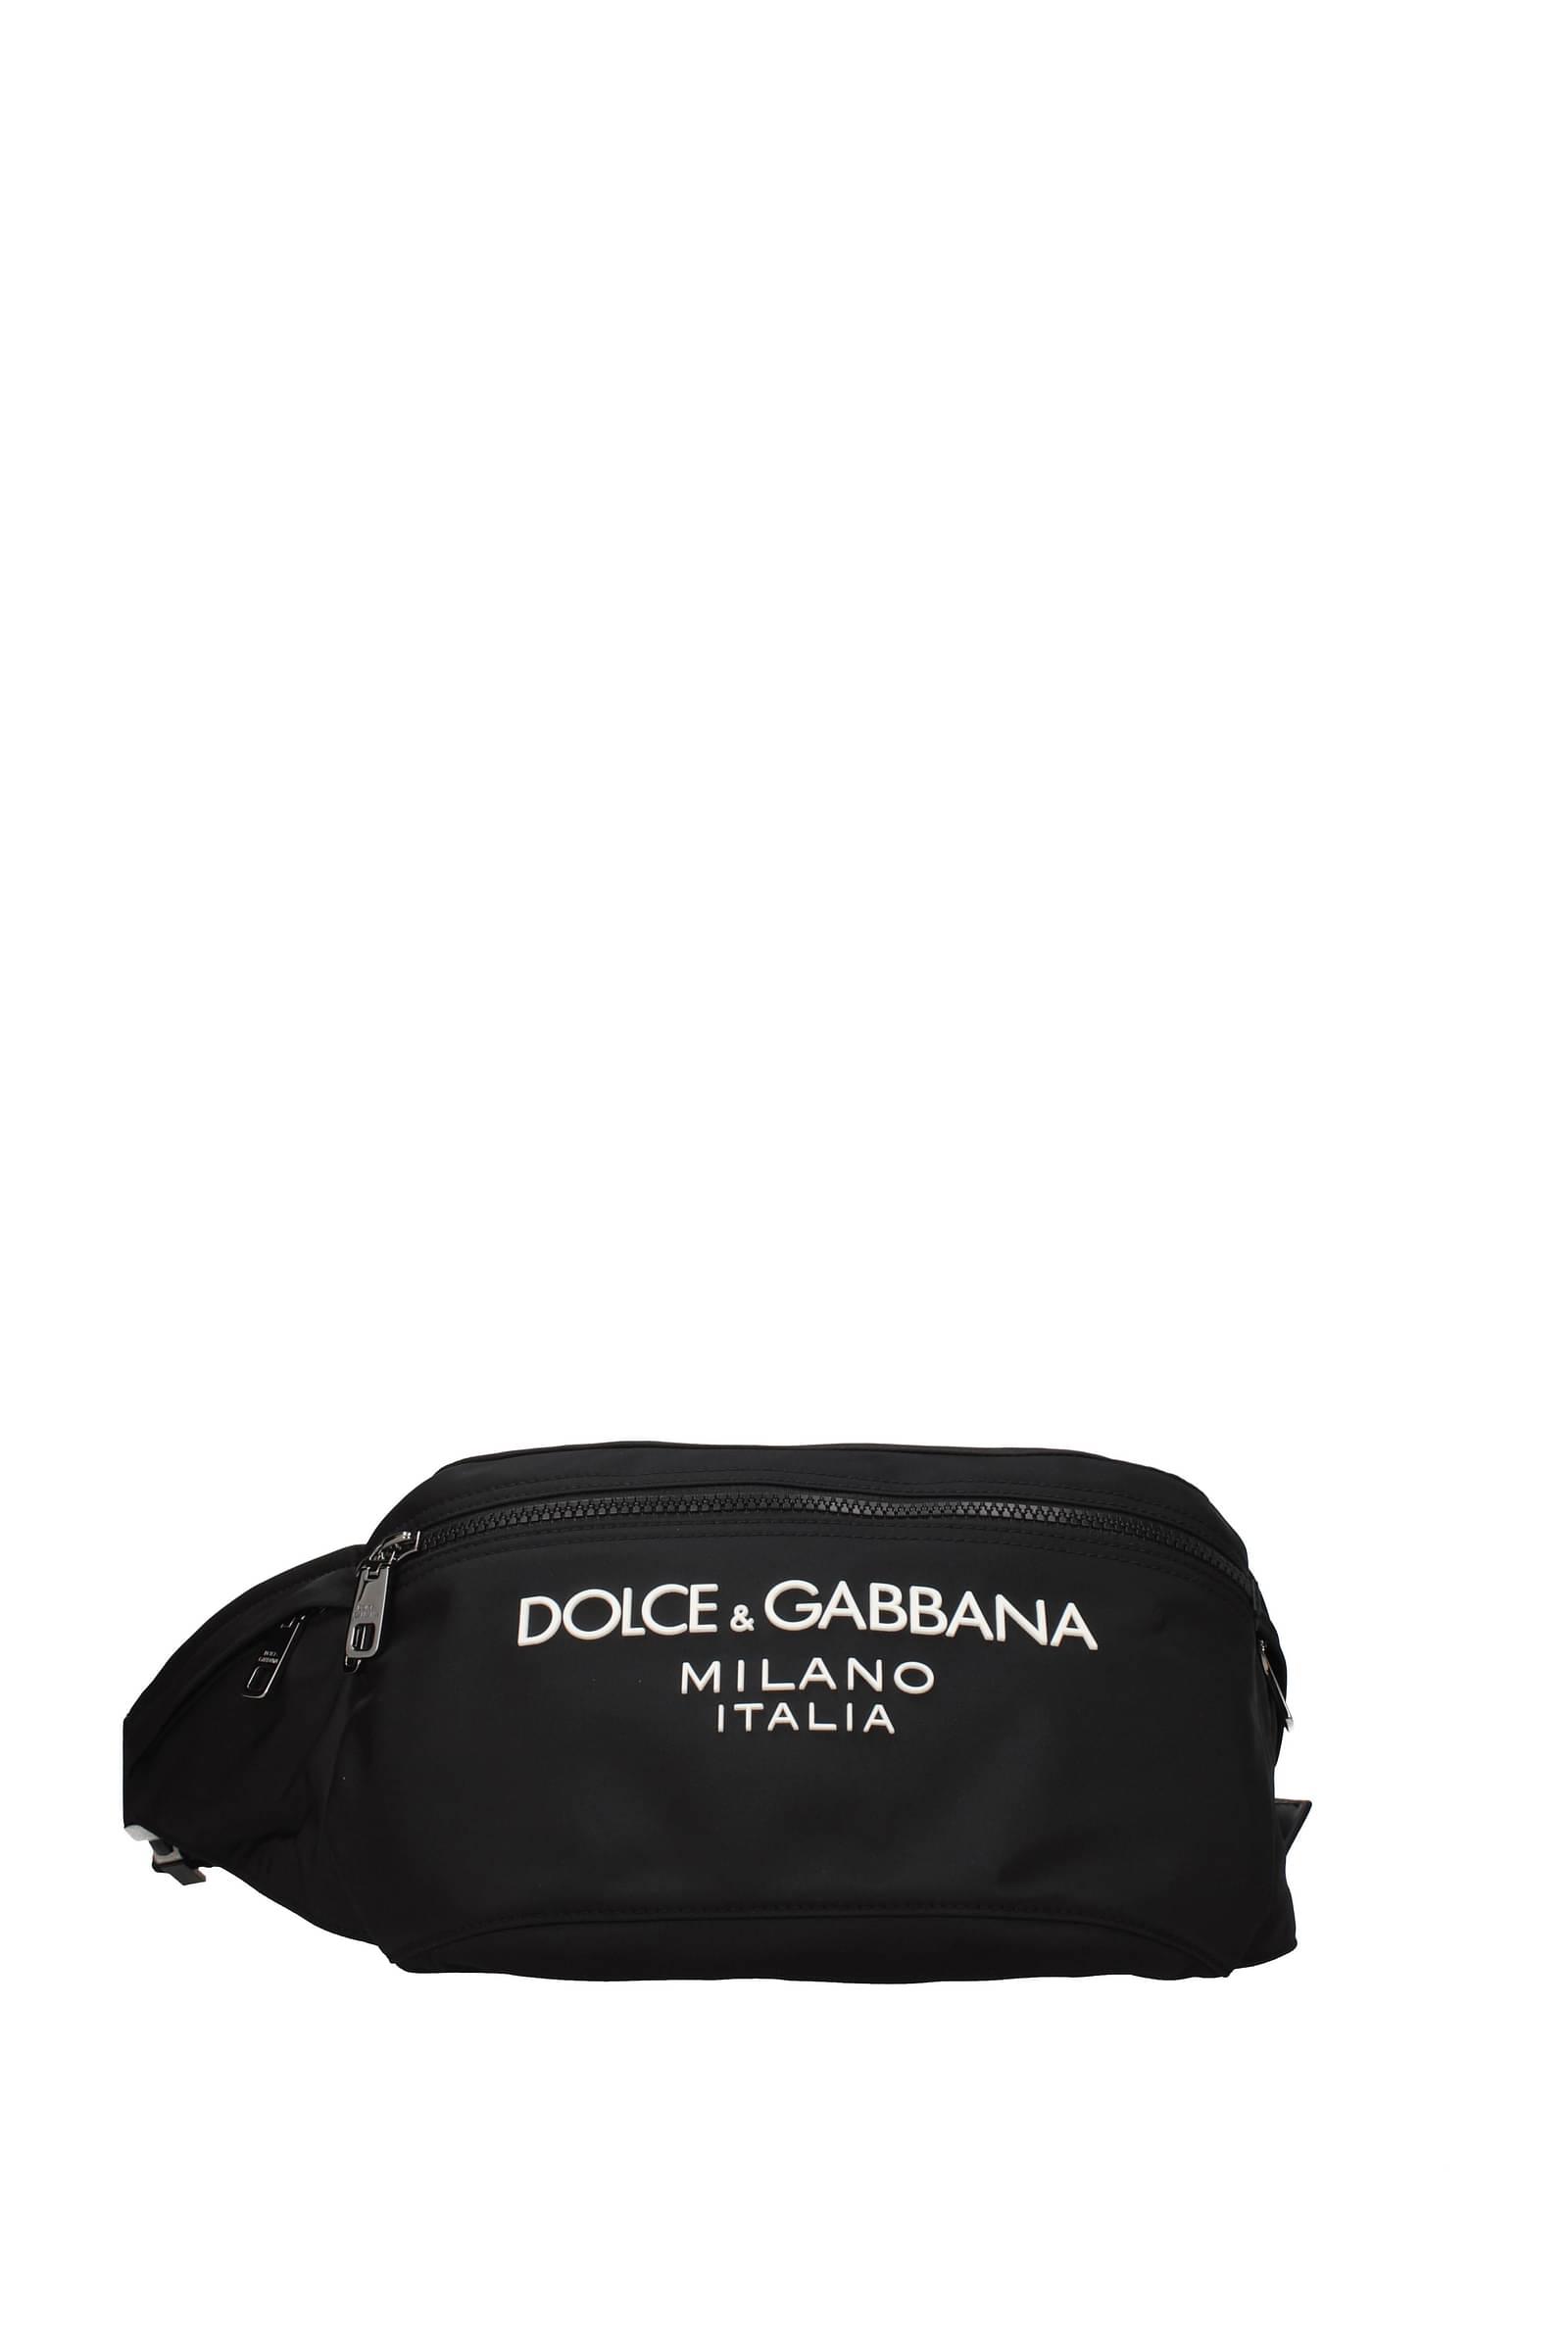 Dolce & Gabbana Backpack And Bumbags Nylon Black White for Men | Lyst